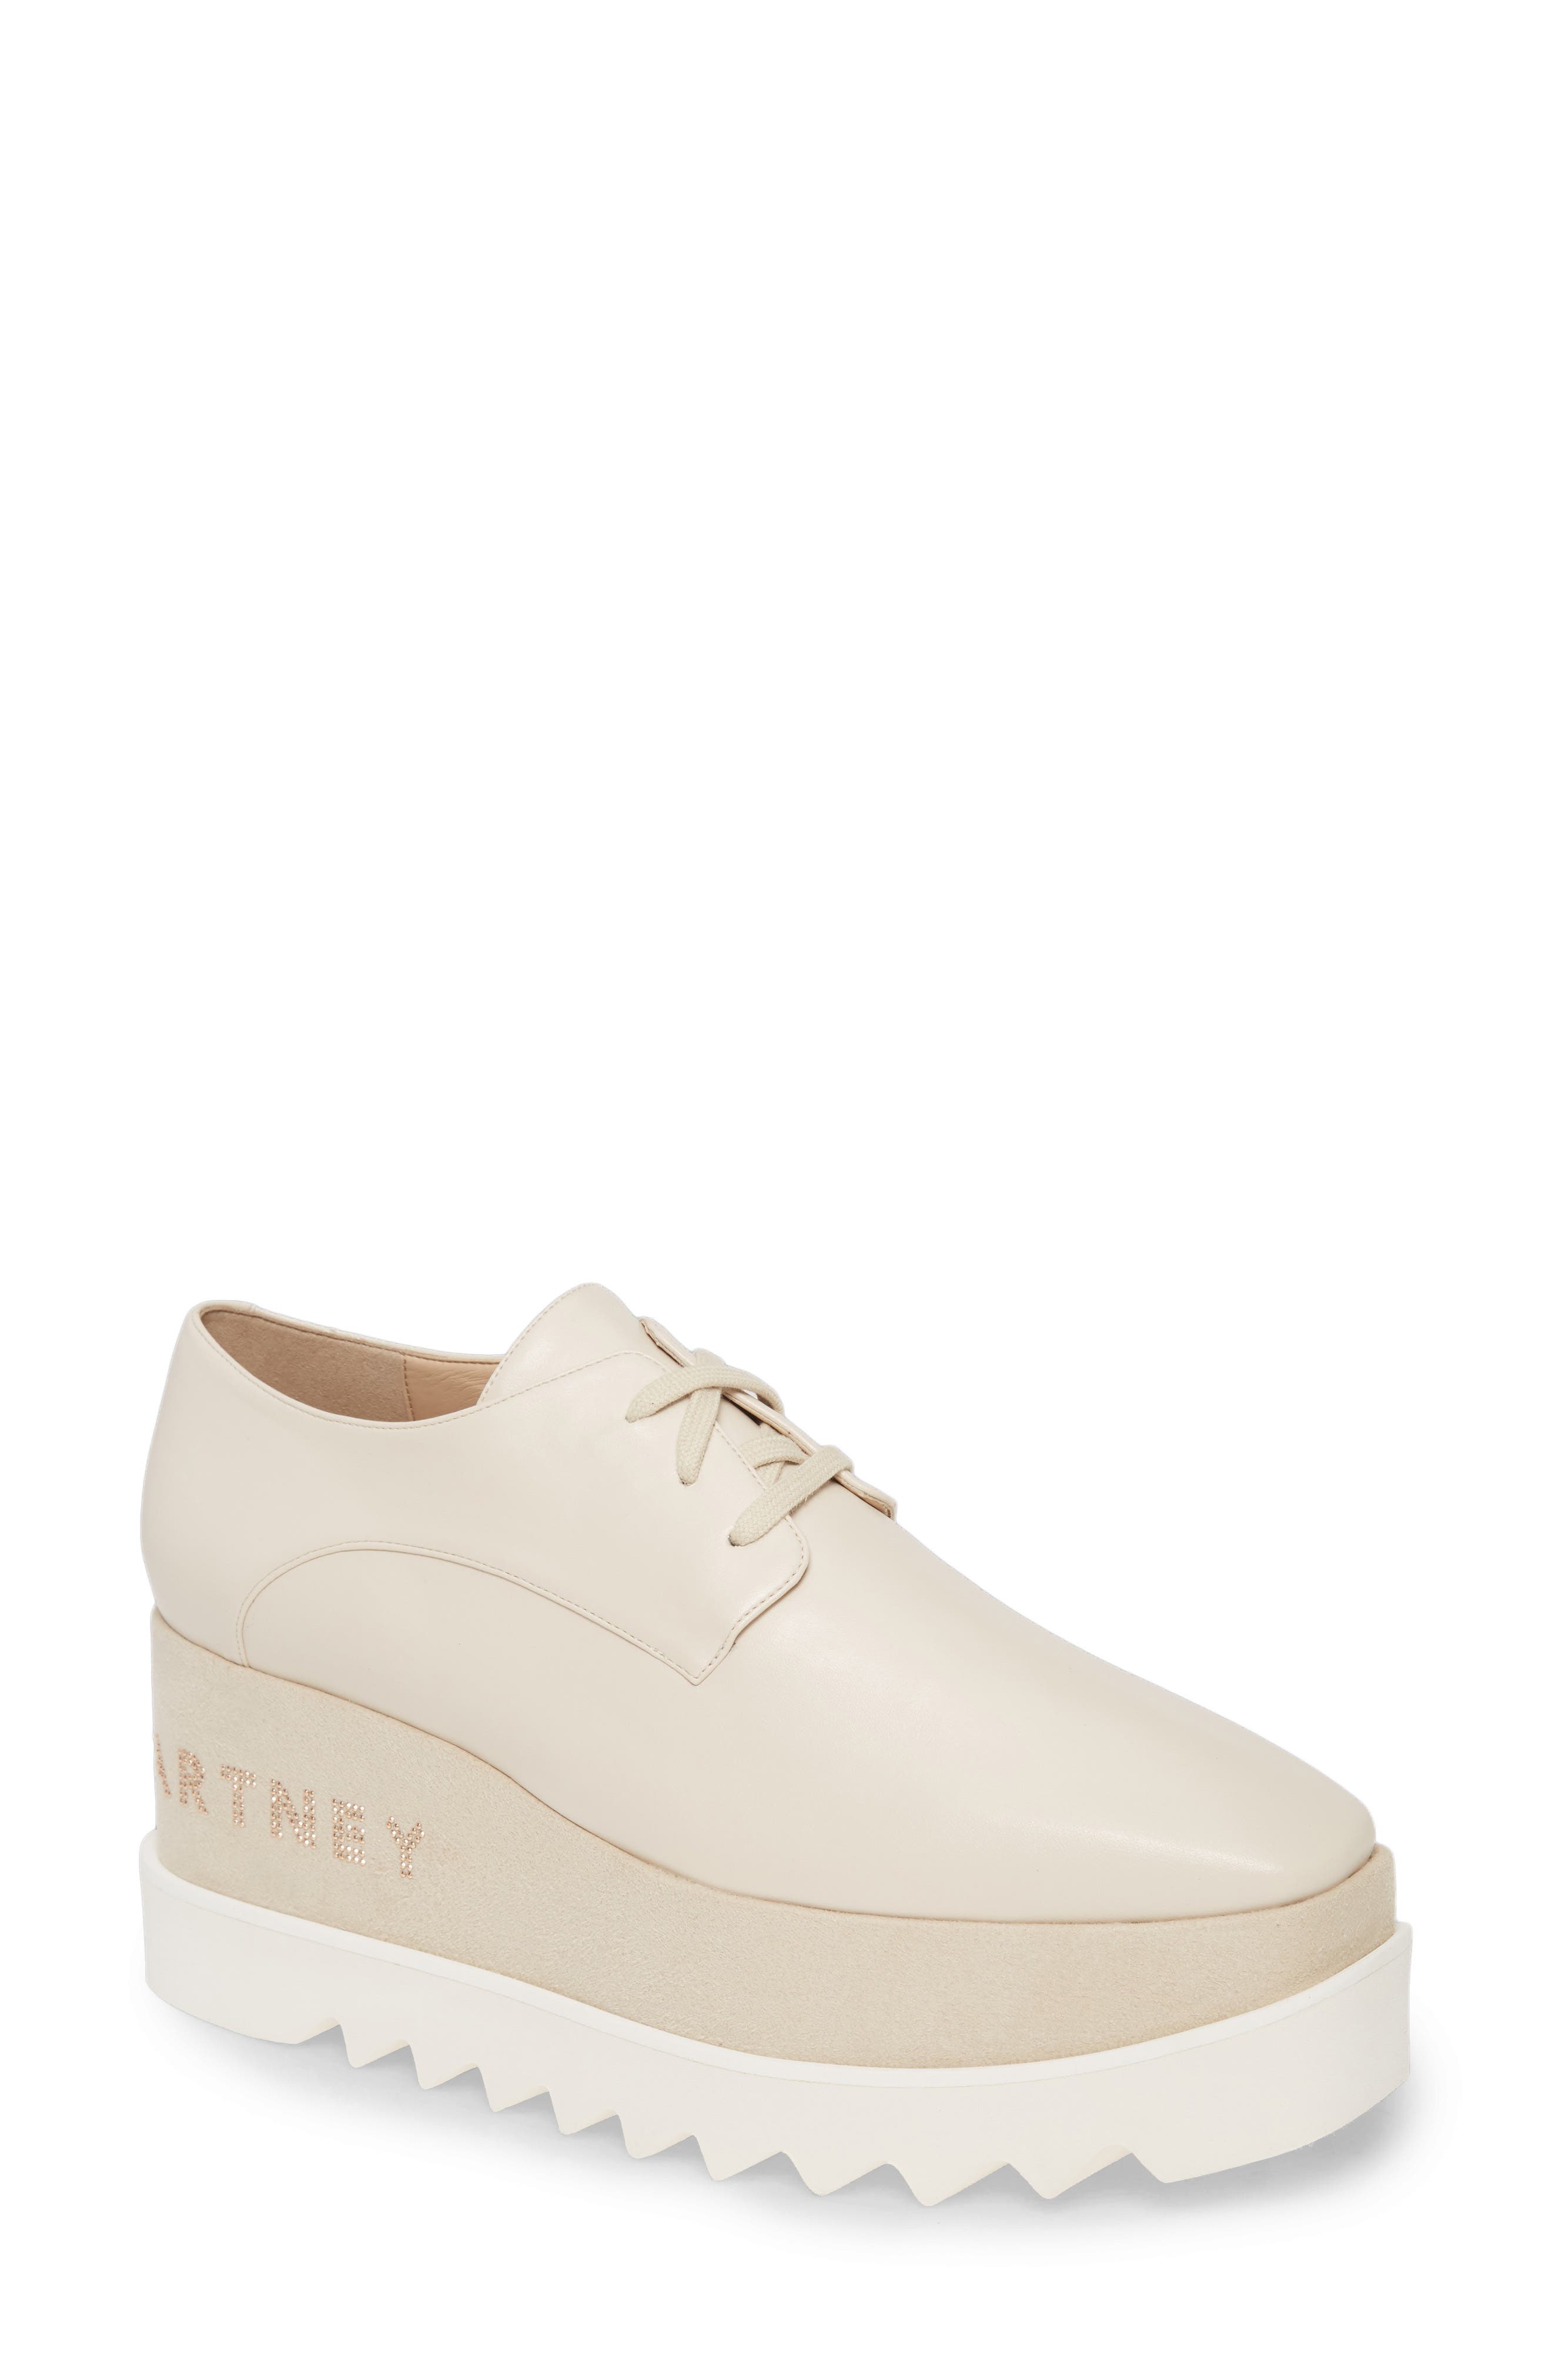 stella mccartney white platform shoes